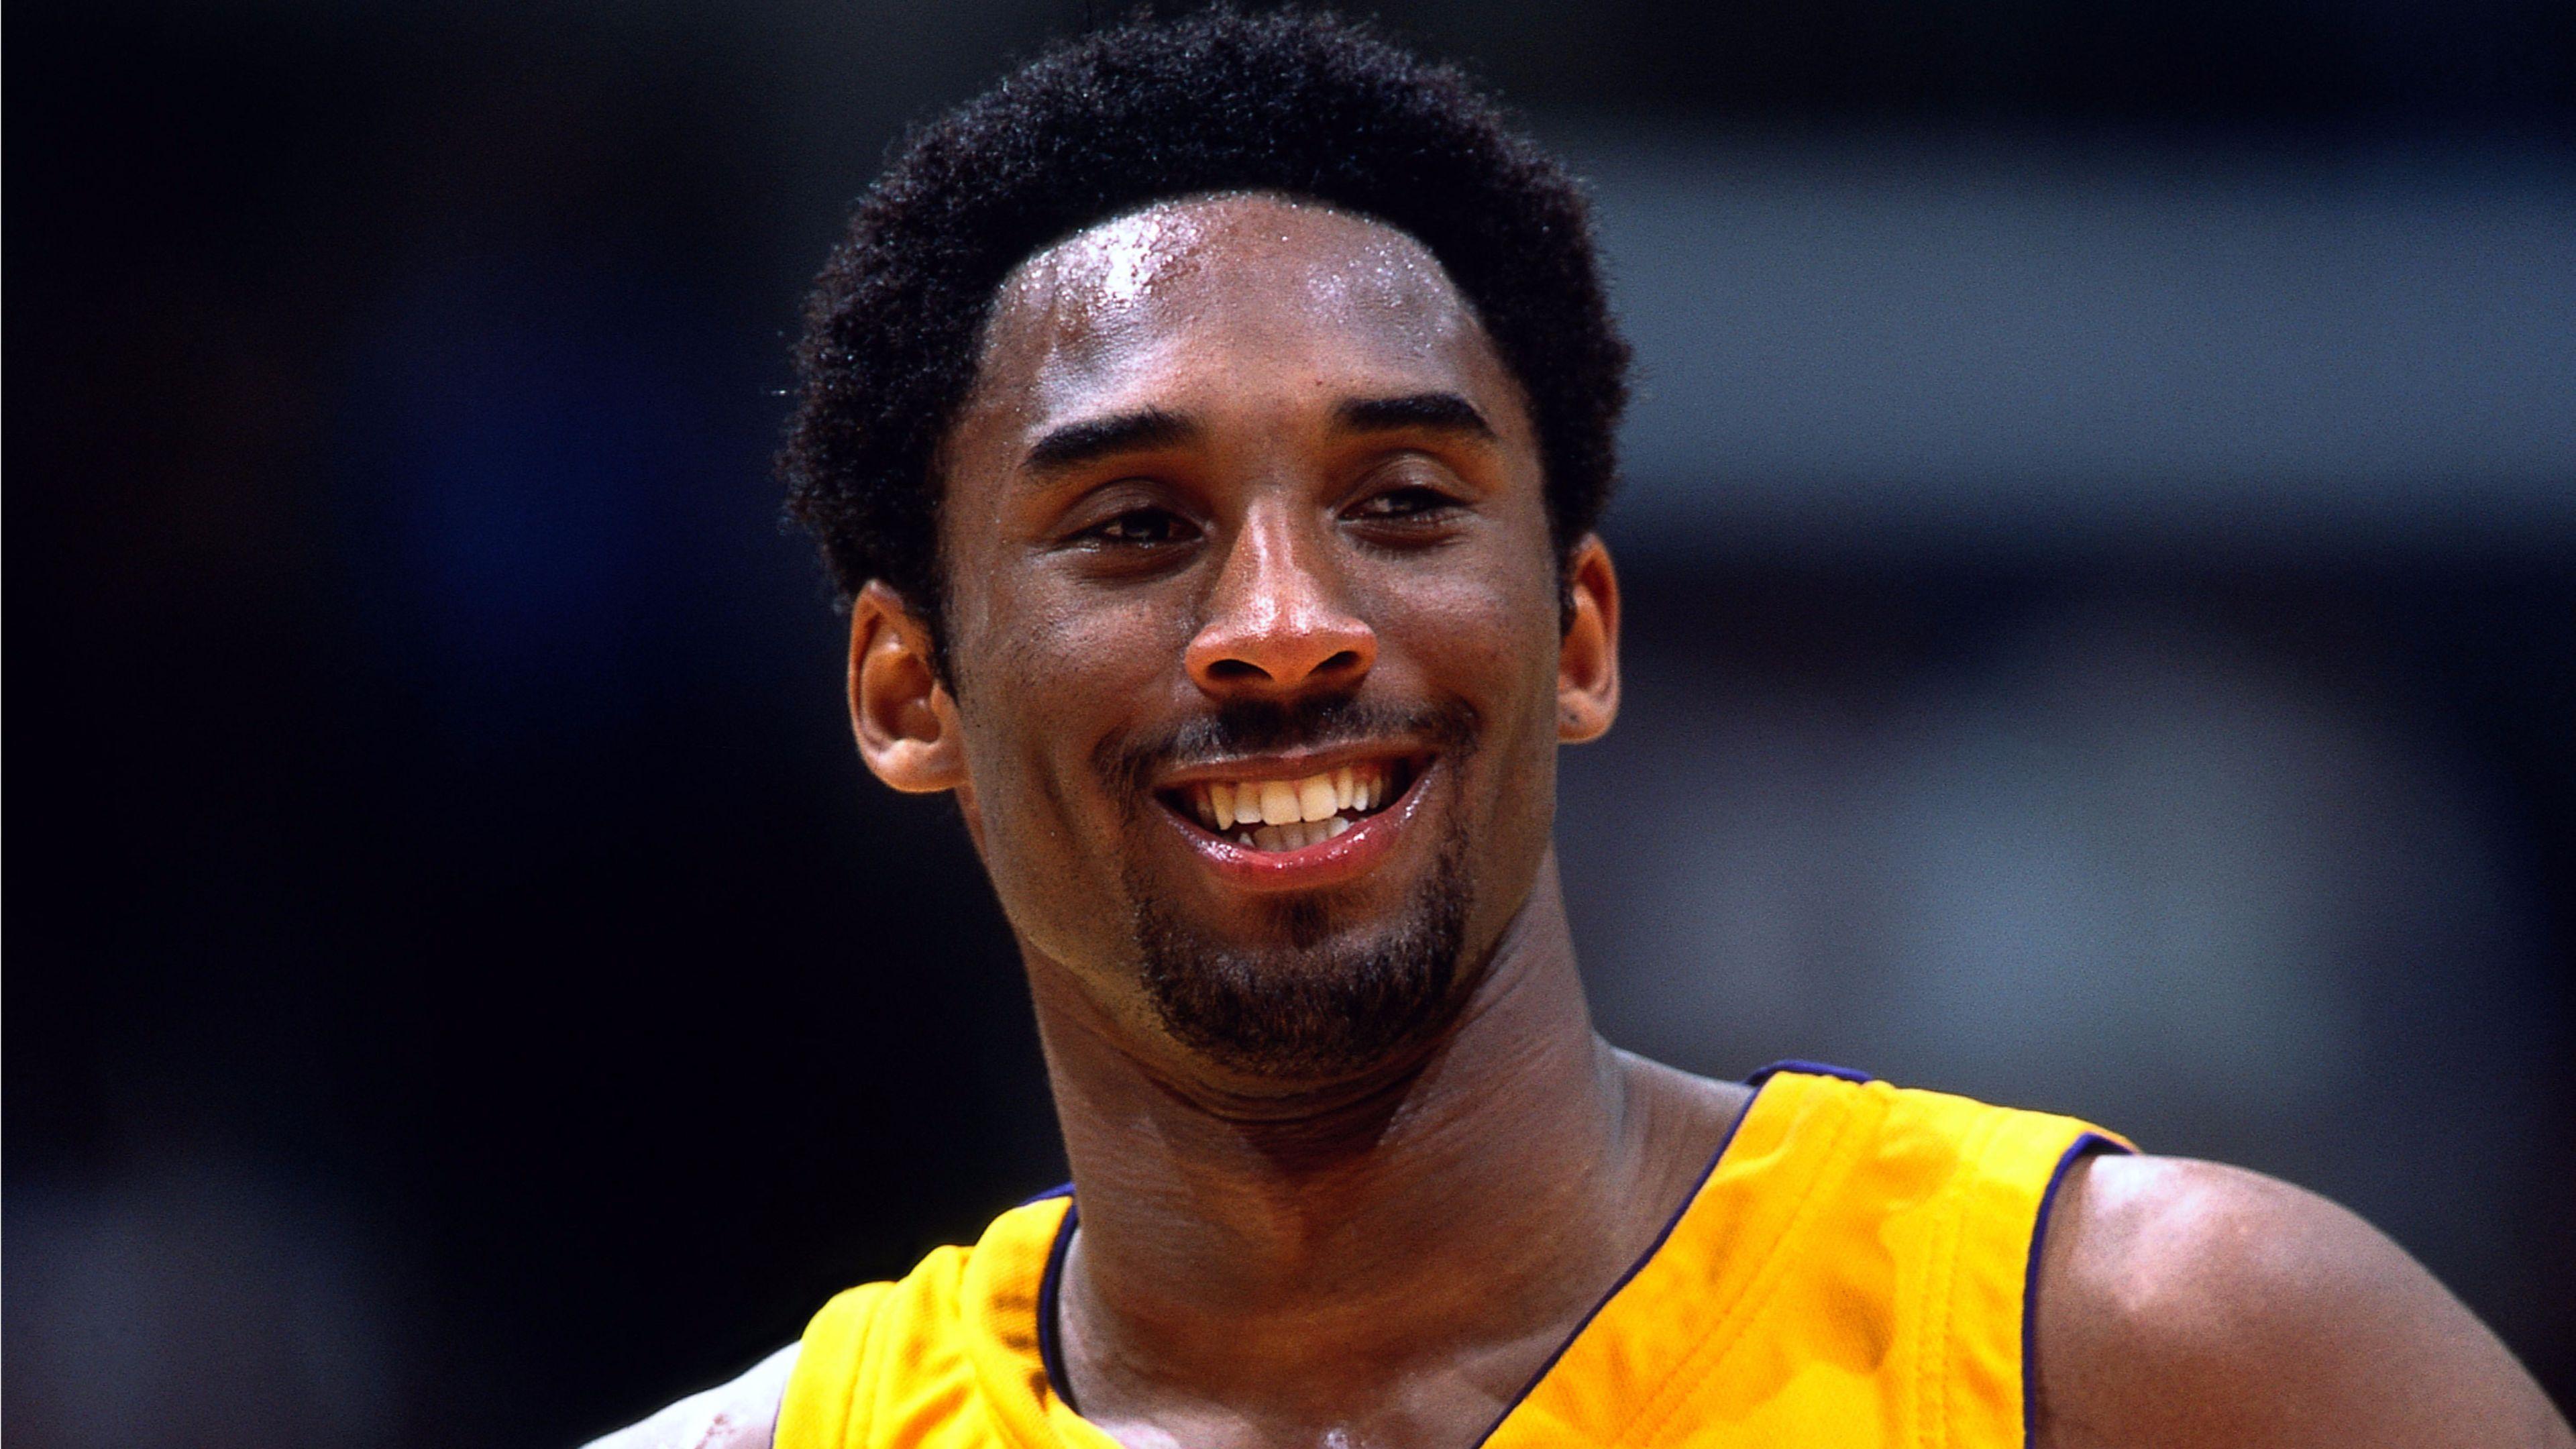 Young Black Mamba La Lakers Kobe Bryant 4K Wallpaper. Free 4K